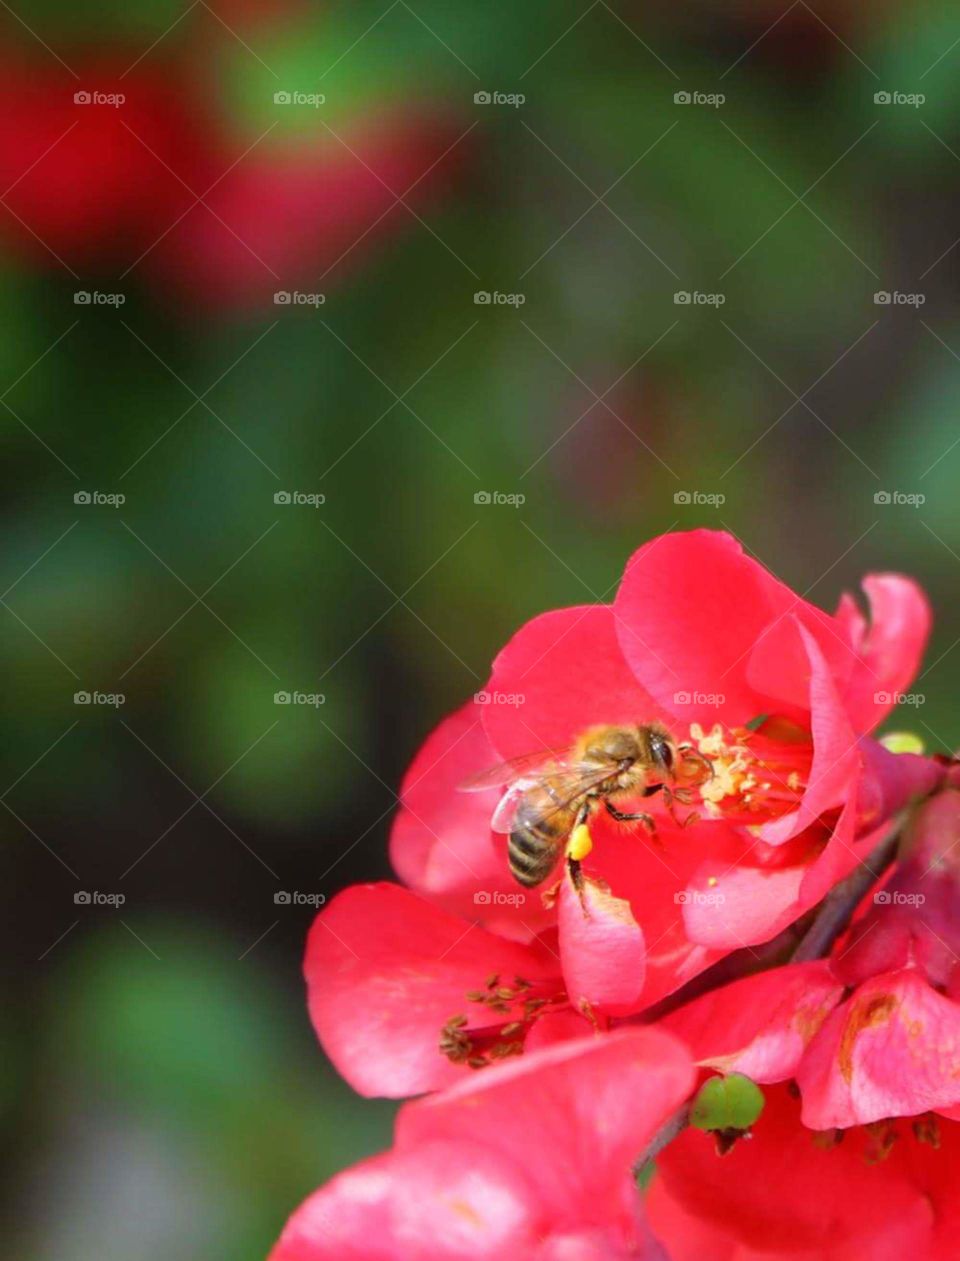 buzzing bee pollinates flower